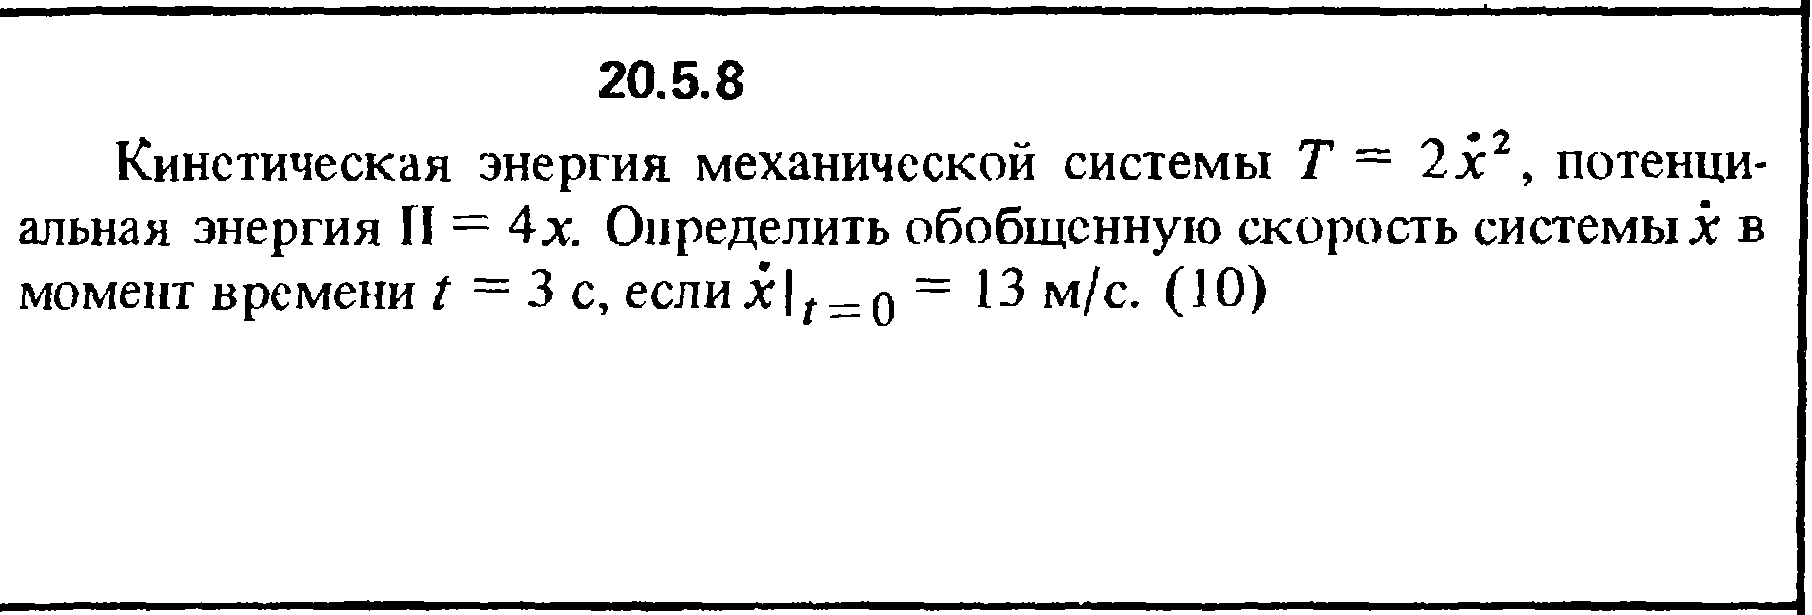 Решение 20.5.8 из сборника (решебника) Кепе О.Е. 1989